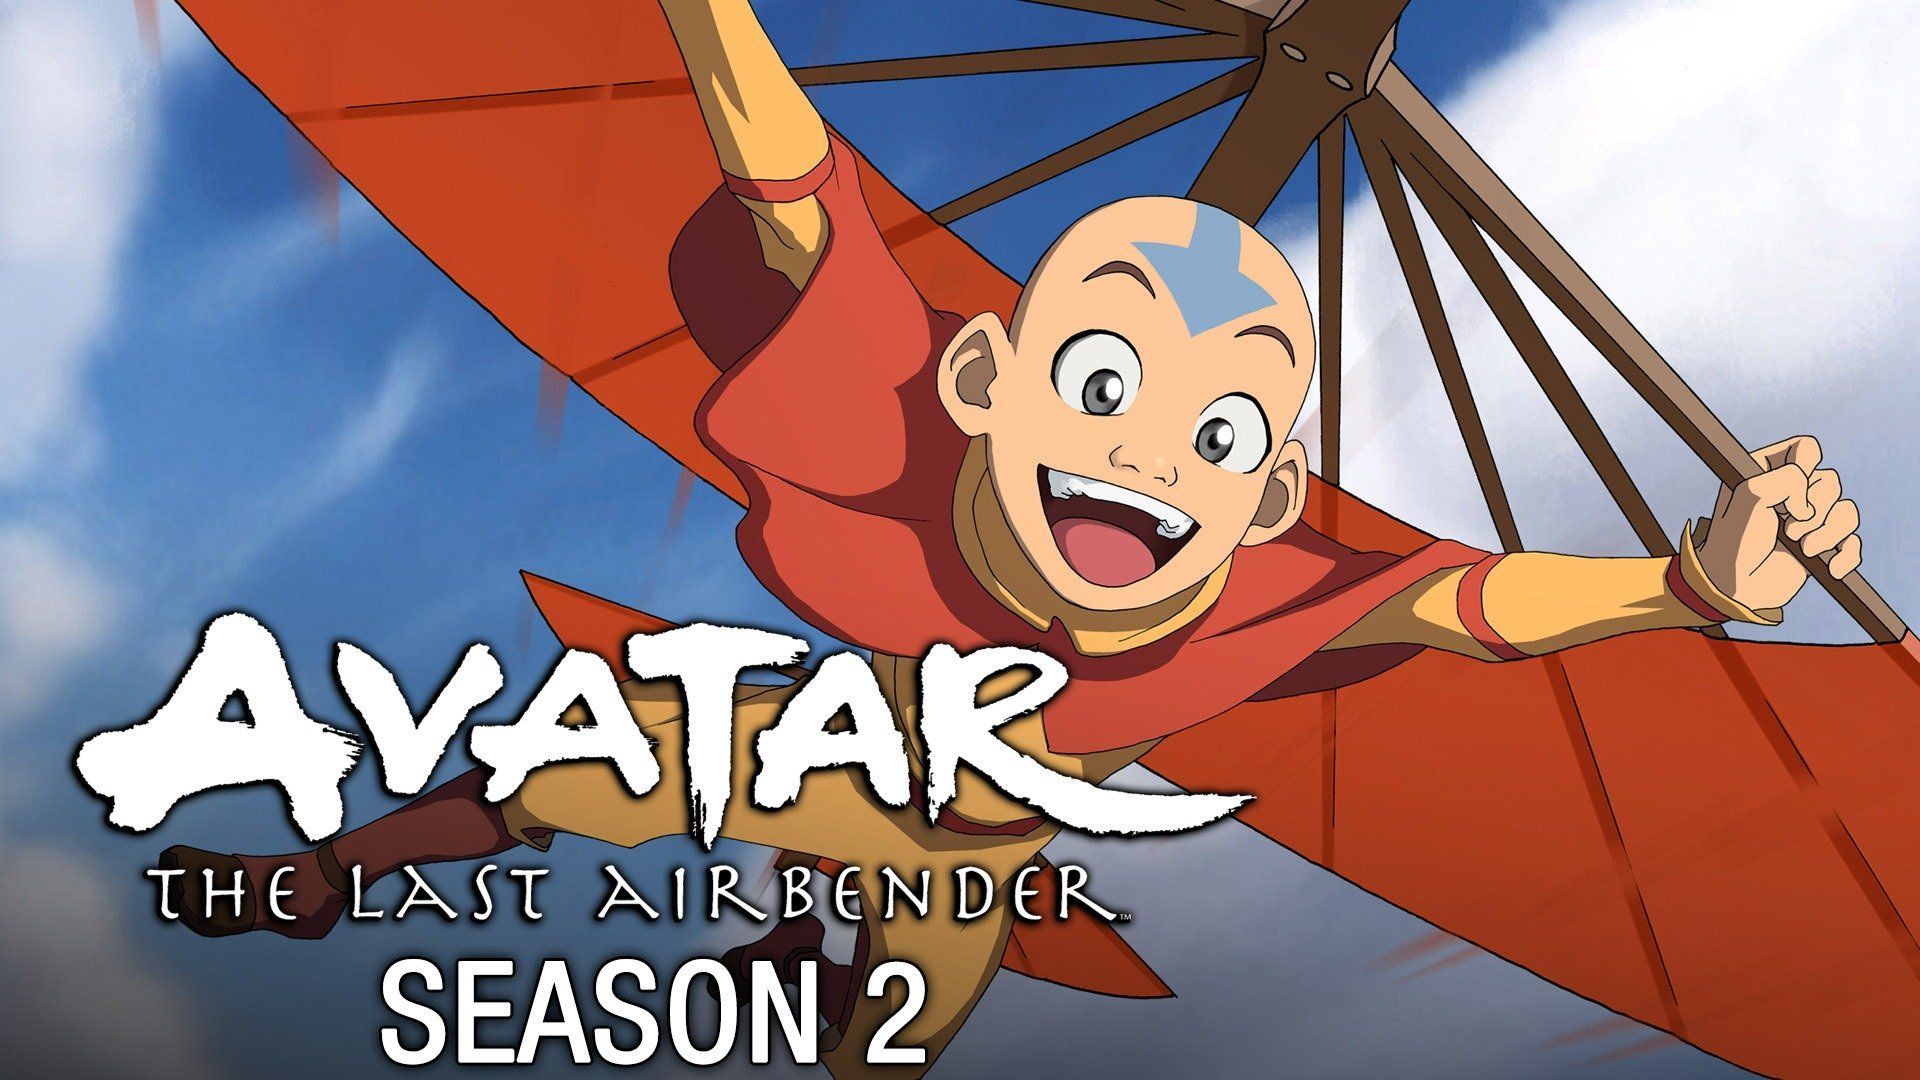 Avatar The Last Airbender 10 Best Season 2 Episodes Ranked By IMDb